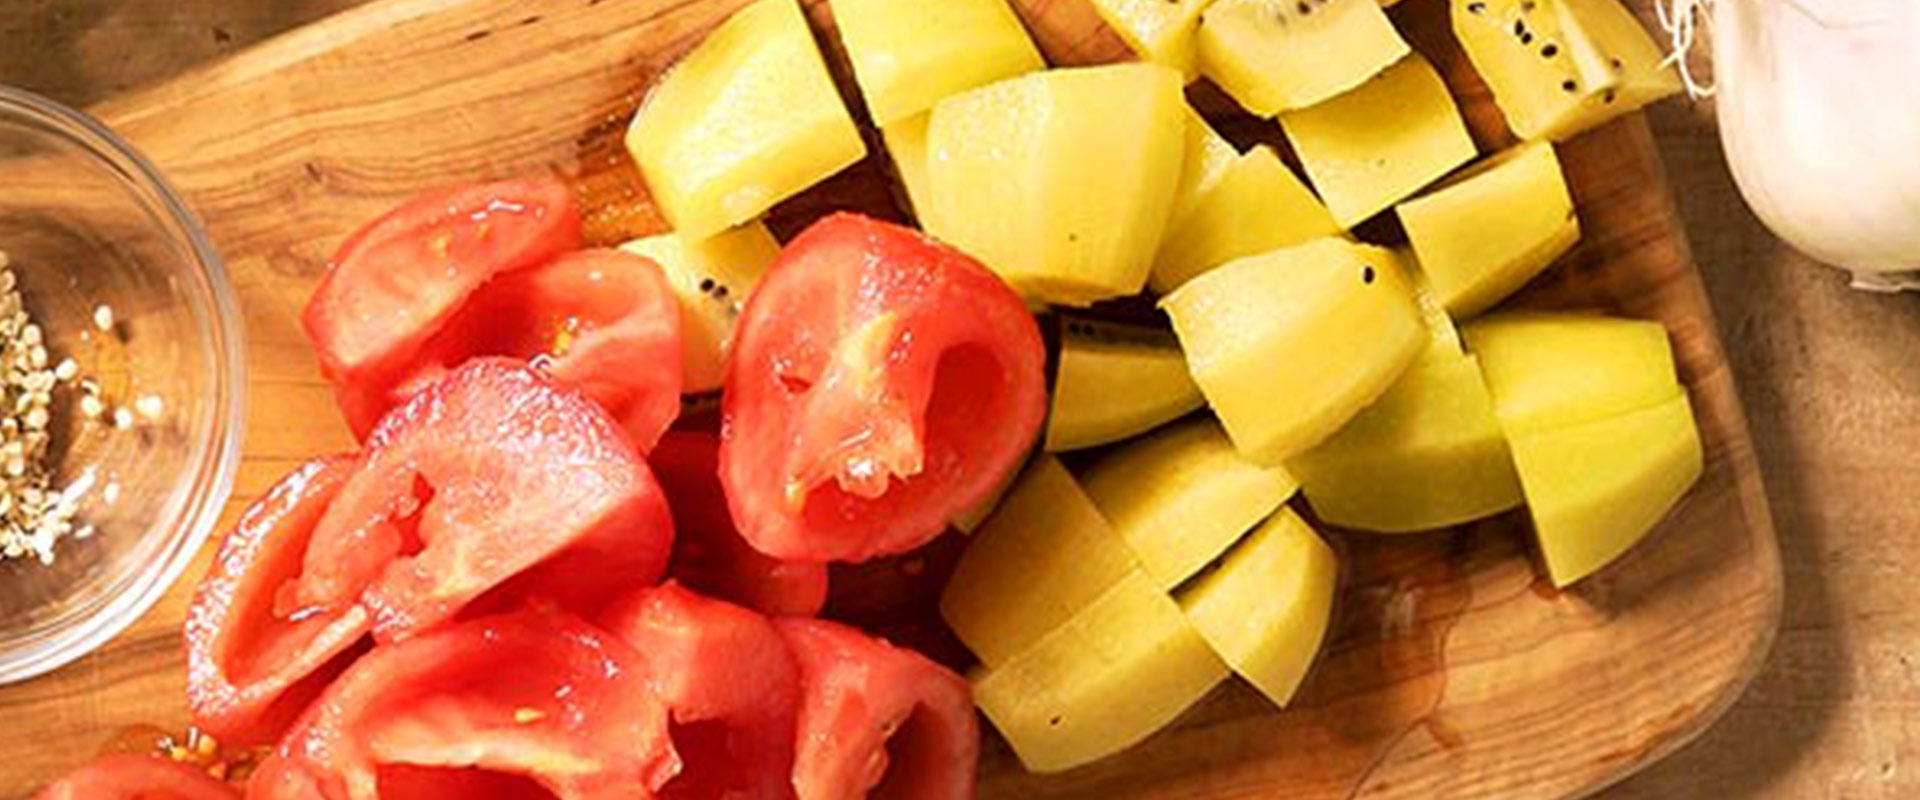 Recipe16-Fruit-and-veggie-smoothie3-thumbnail.jpg